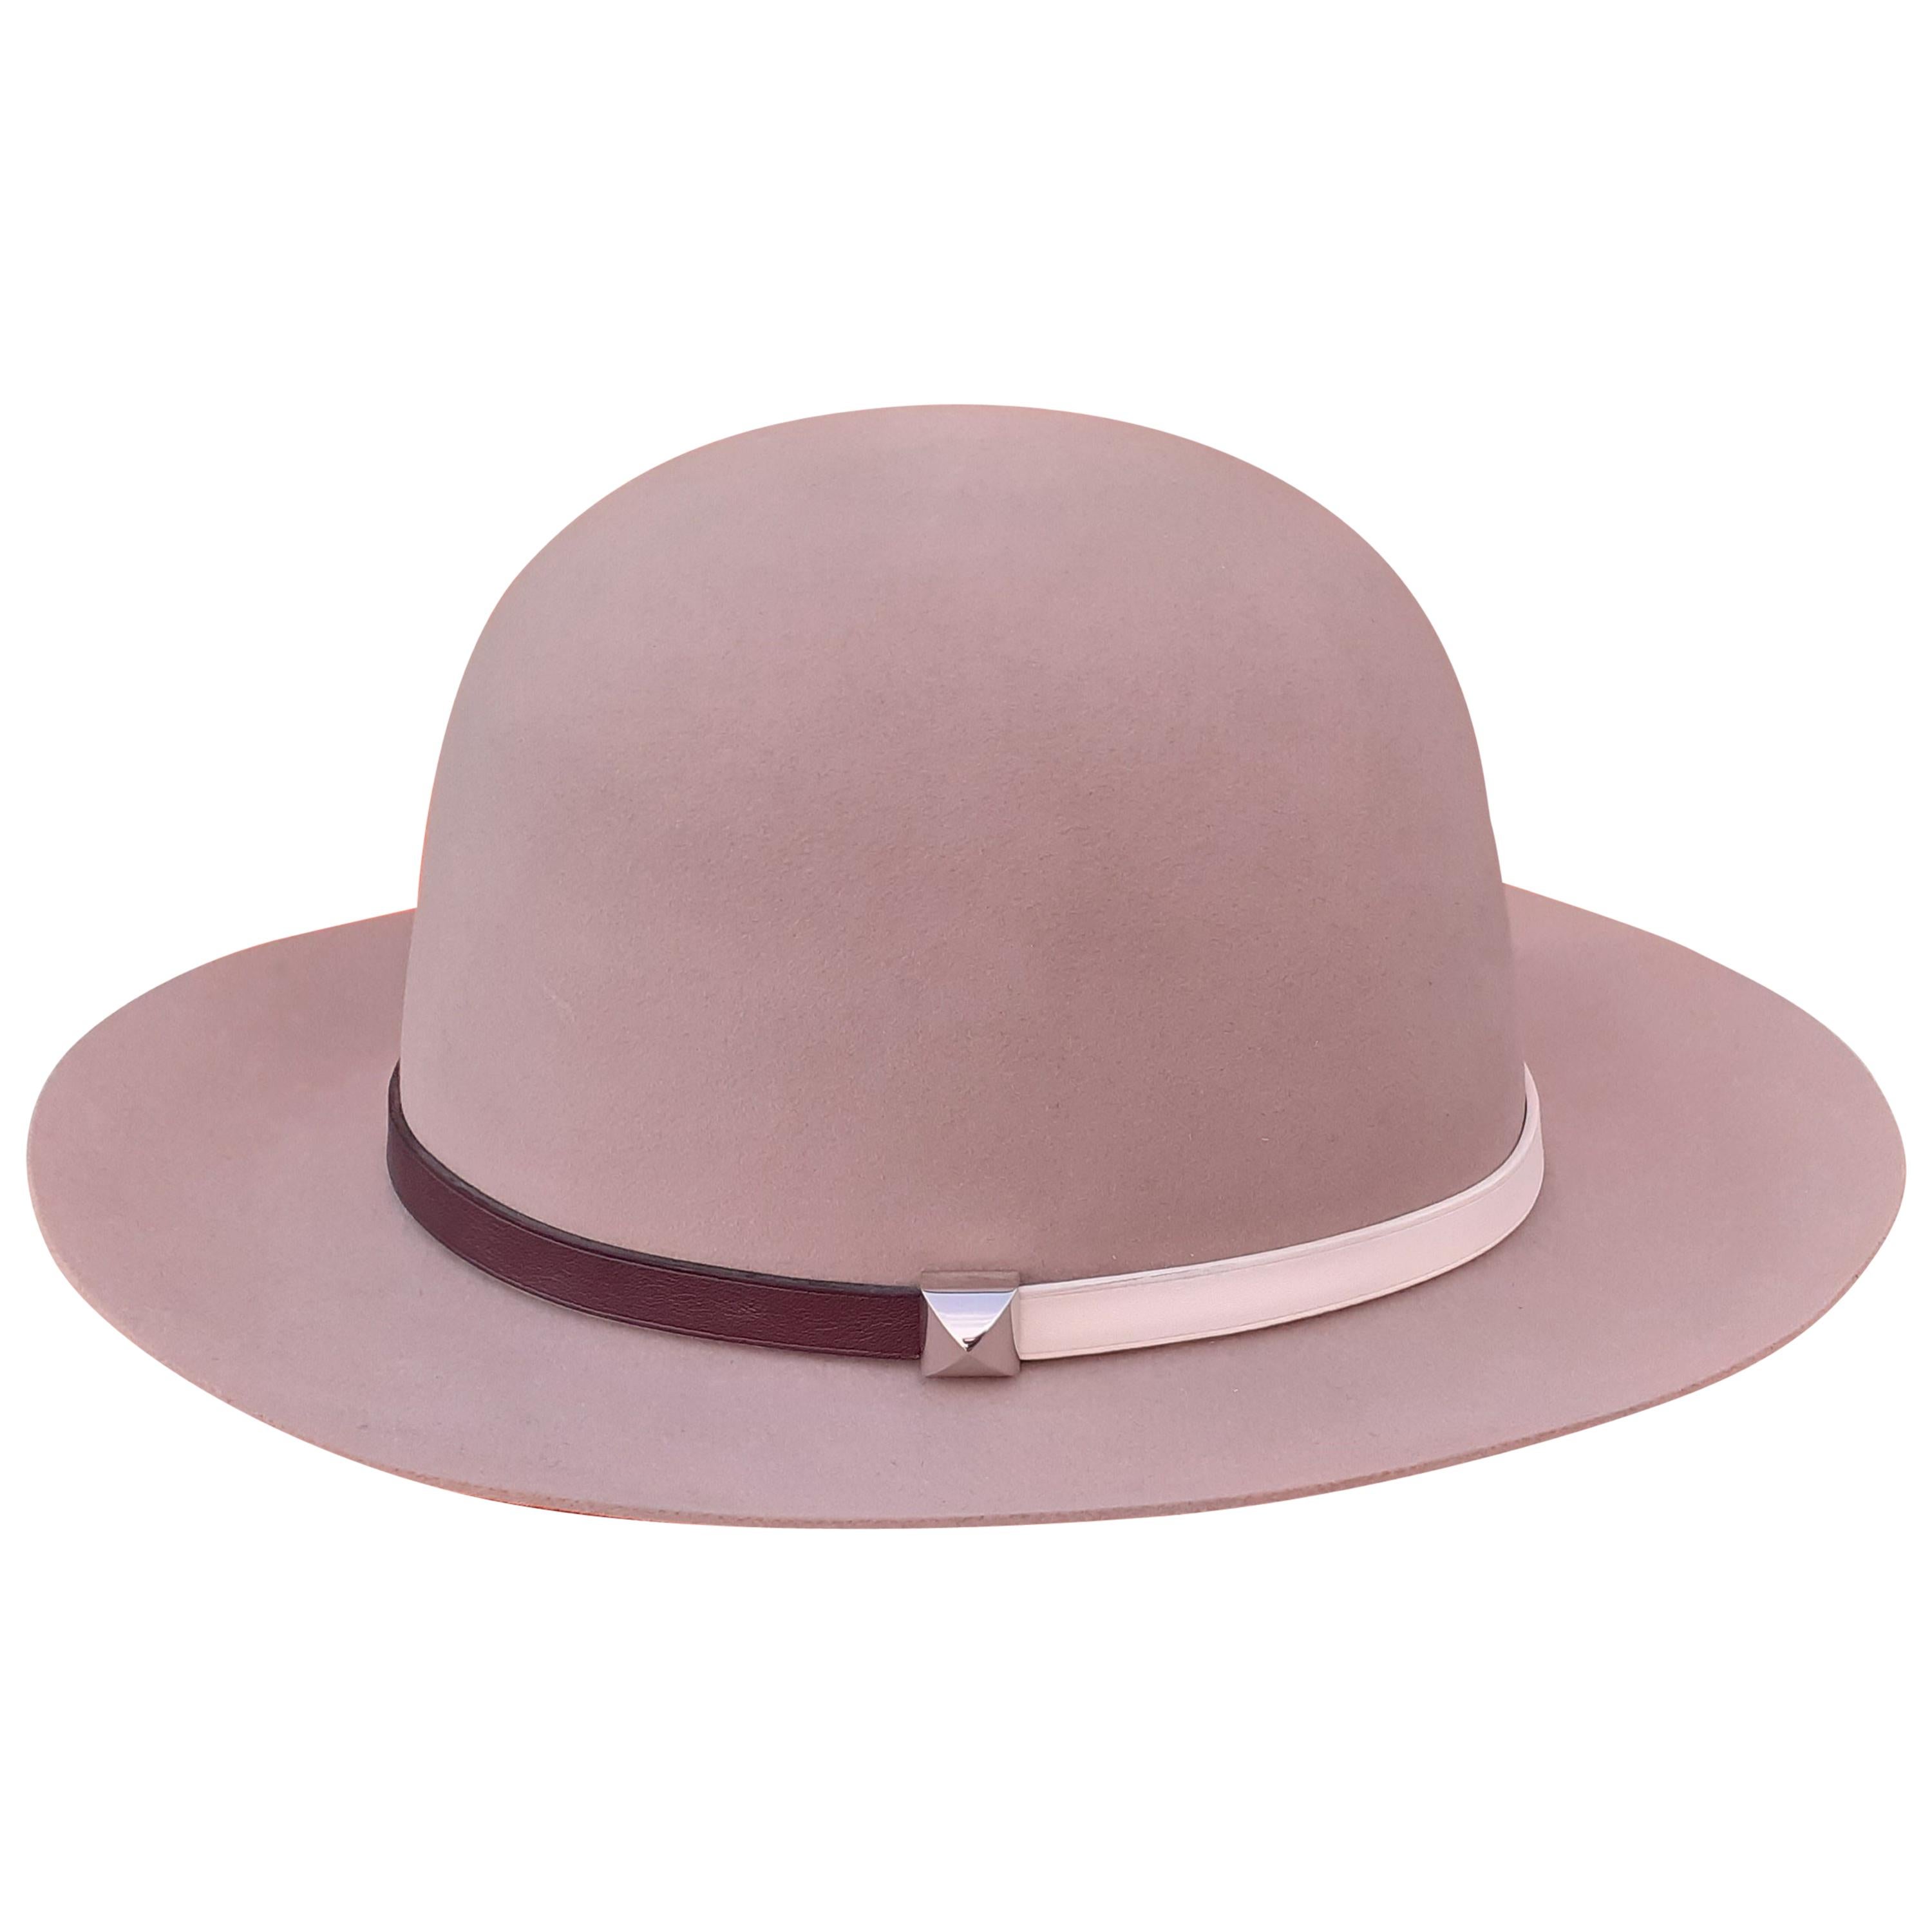 Hermès Woman Felt Hat Burundy and Craie Leather Trim Clou Medor Size 57 